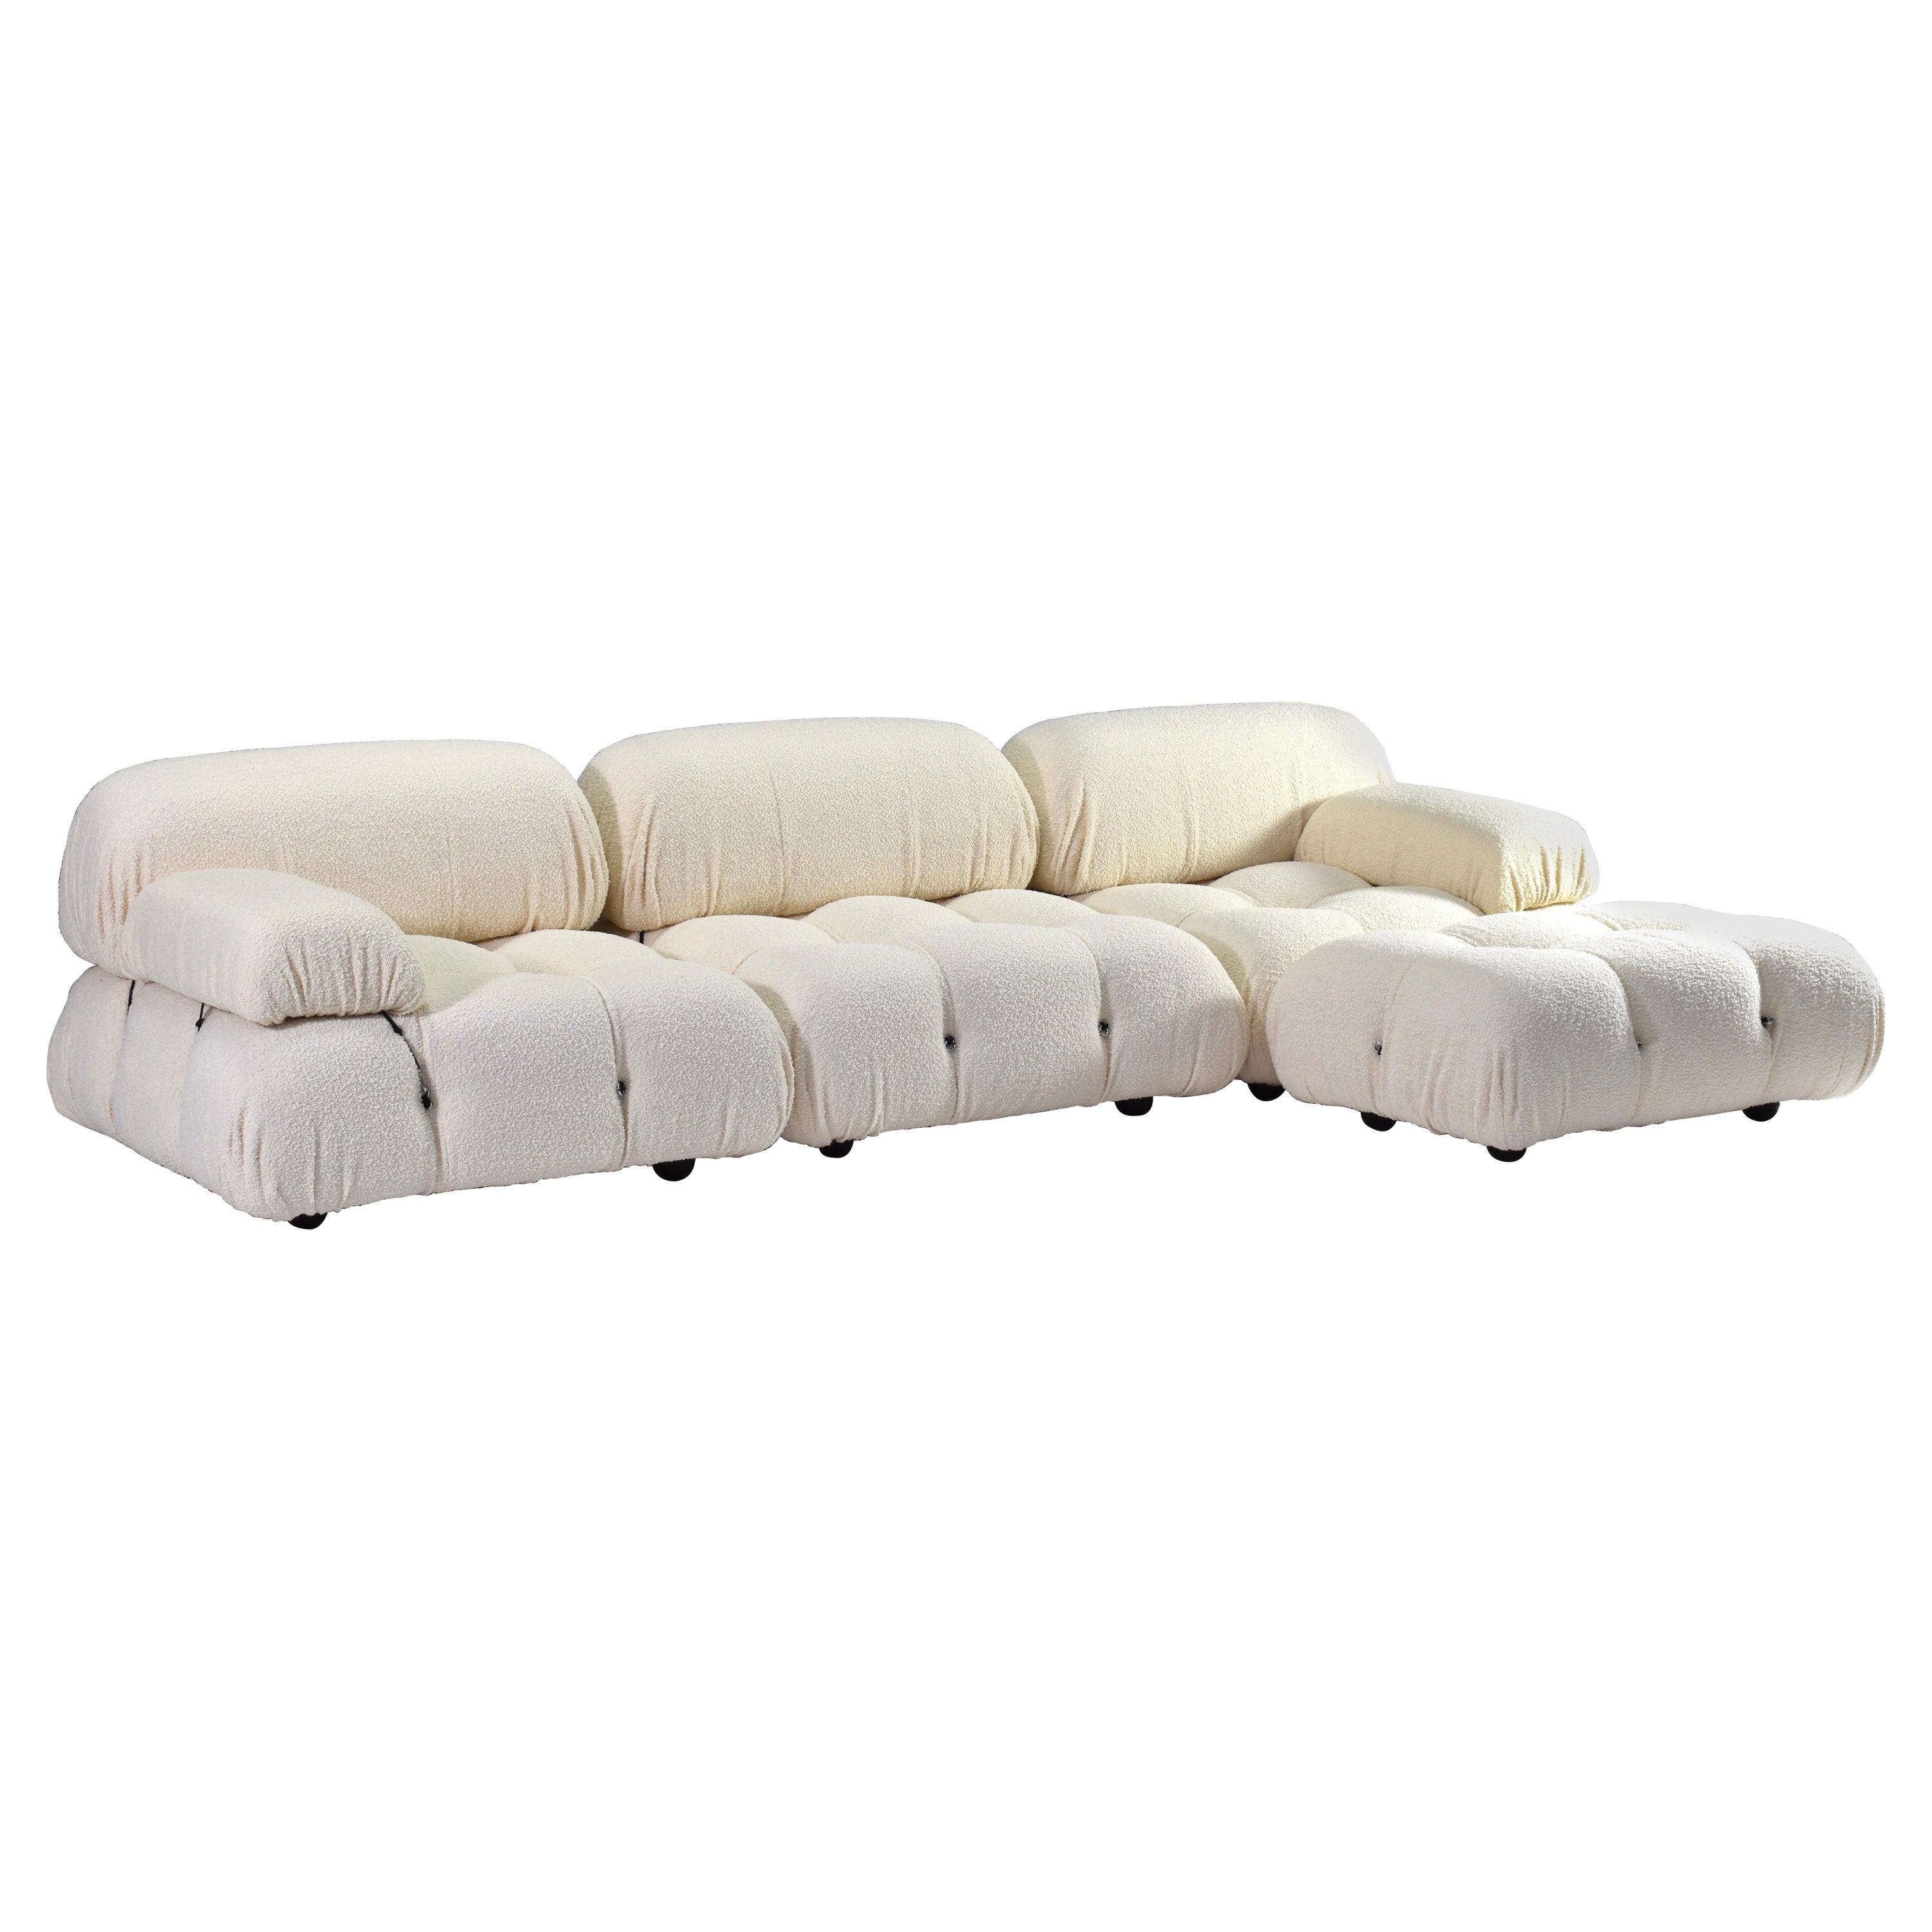 Camaleonda Sectional Sofa by Mario Bellini for B&B Italia, New Upholstered